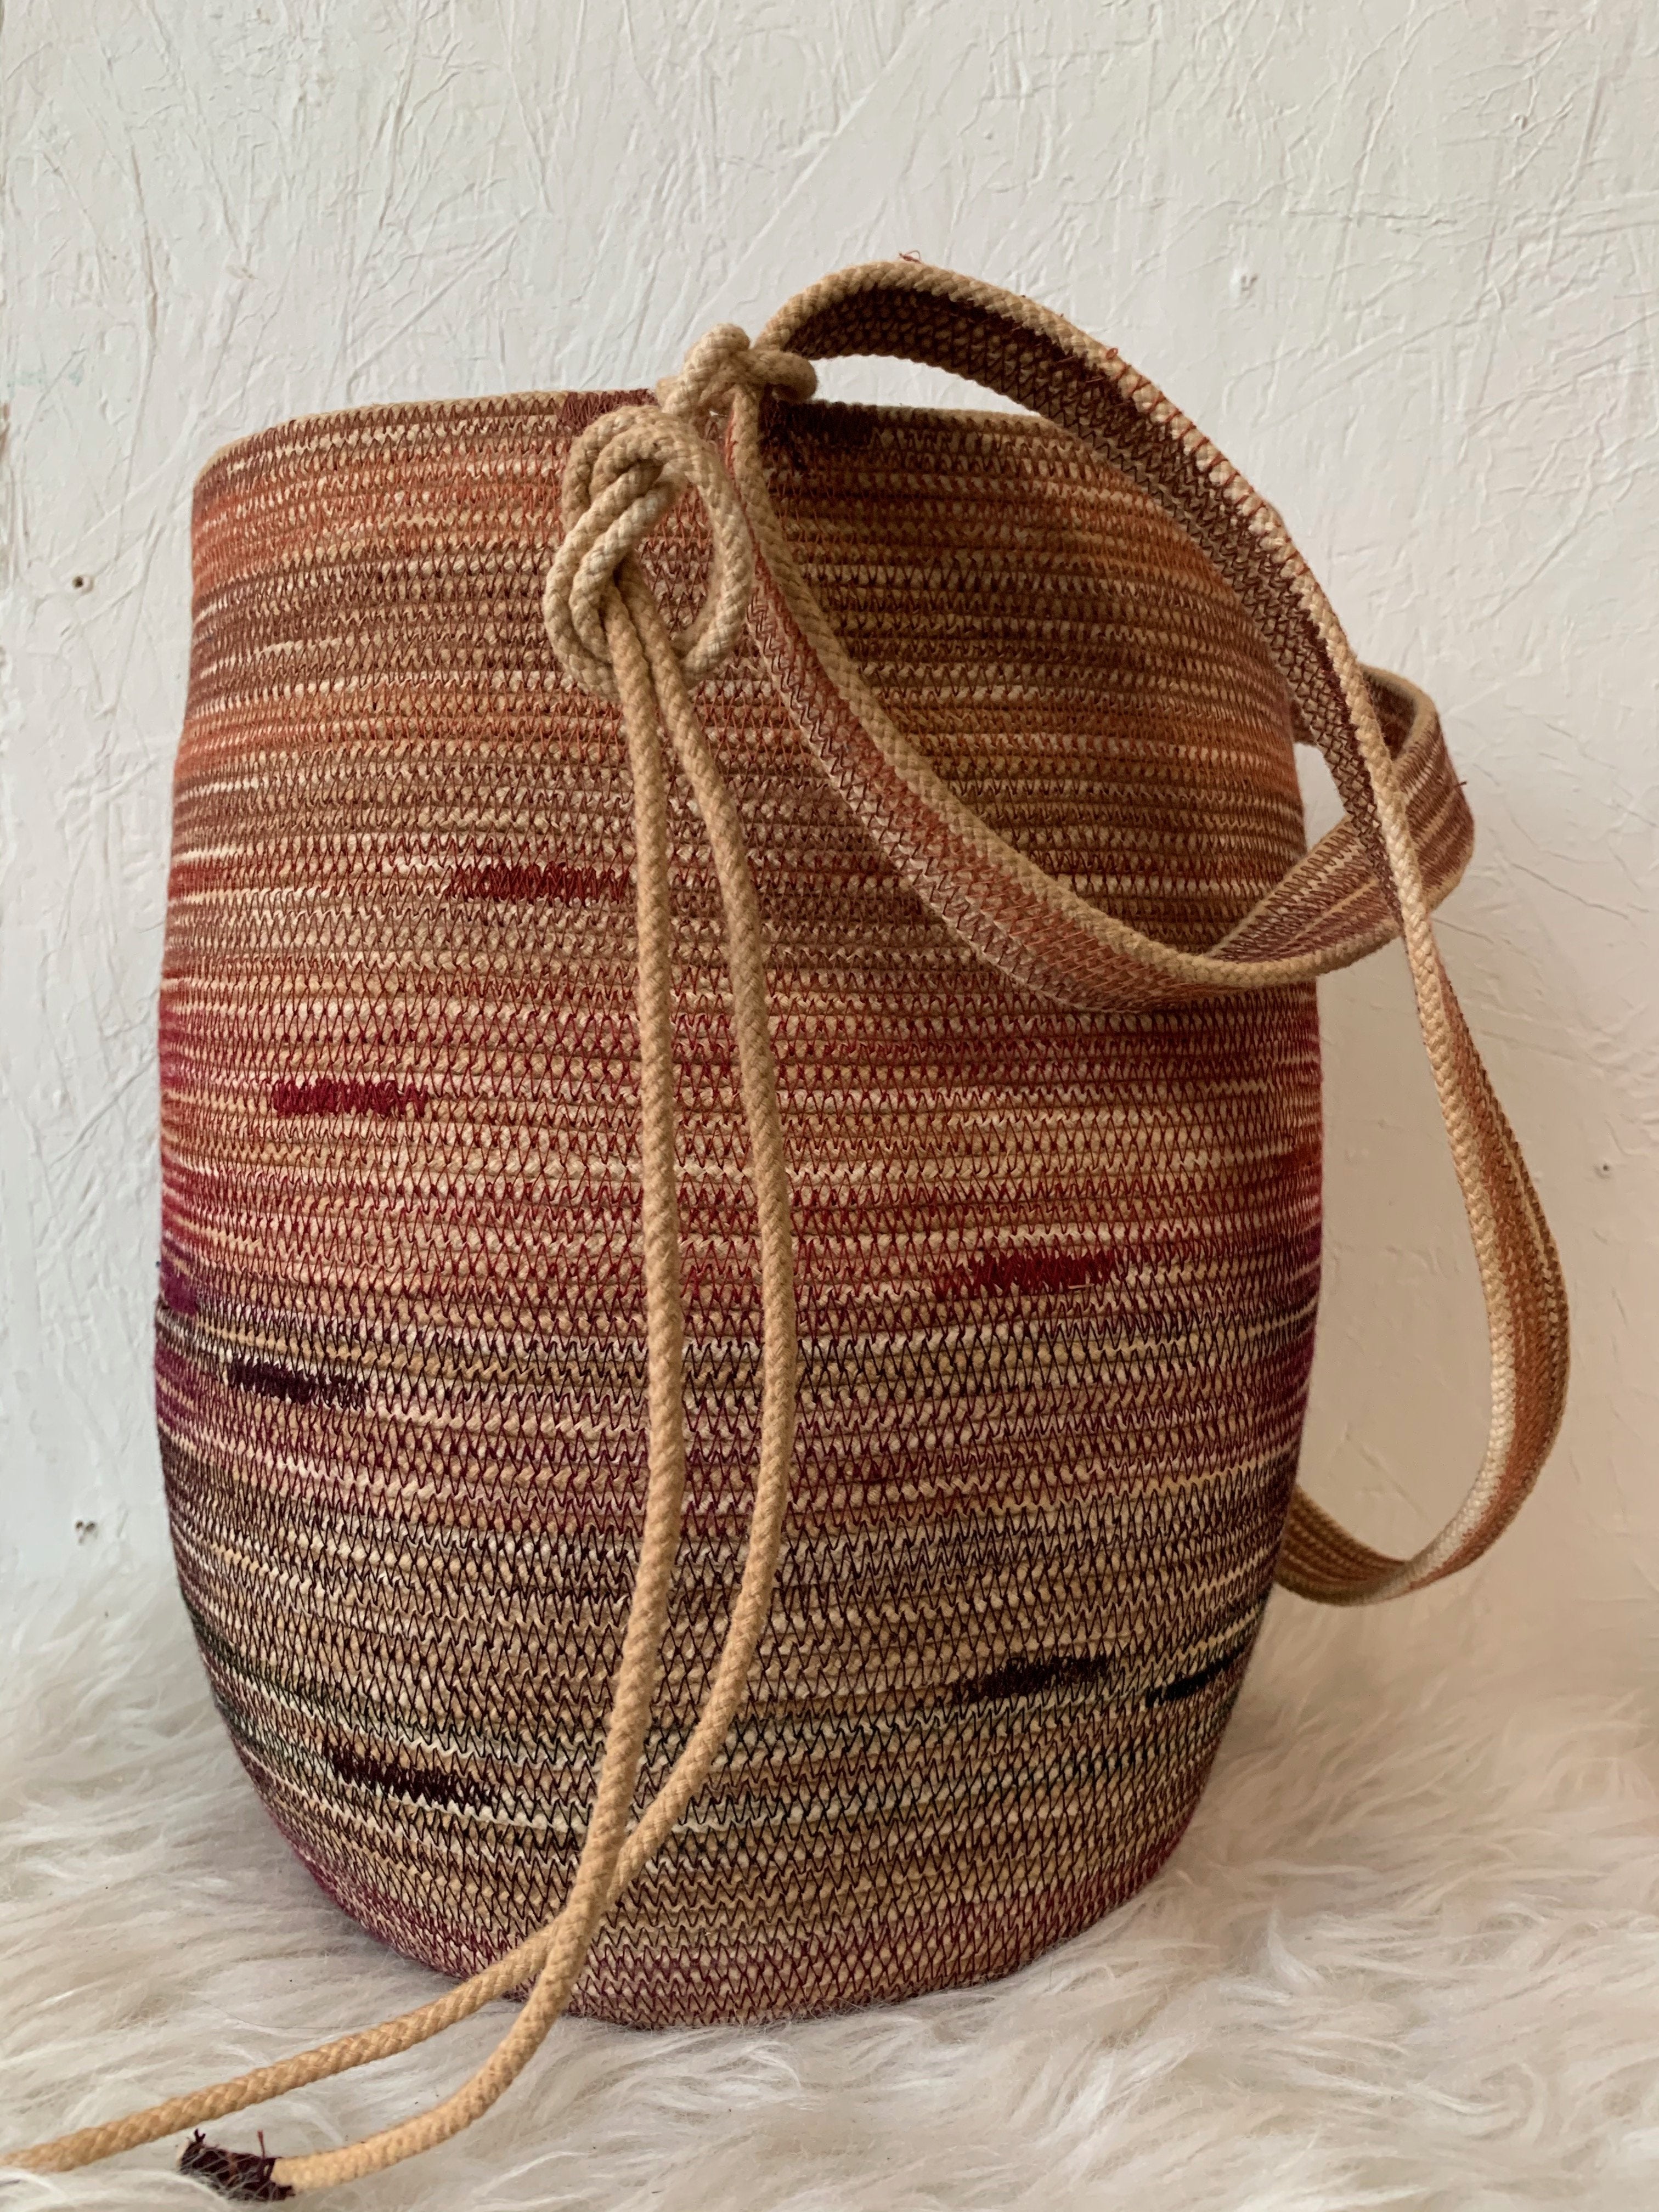 handmade cotton rope basket